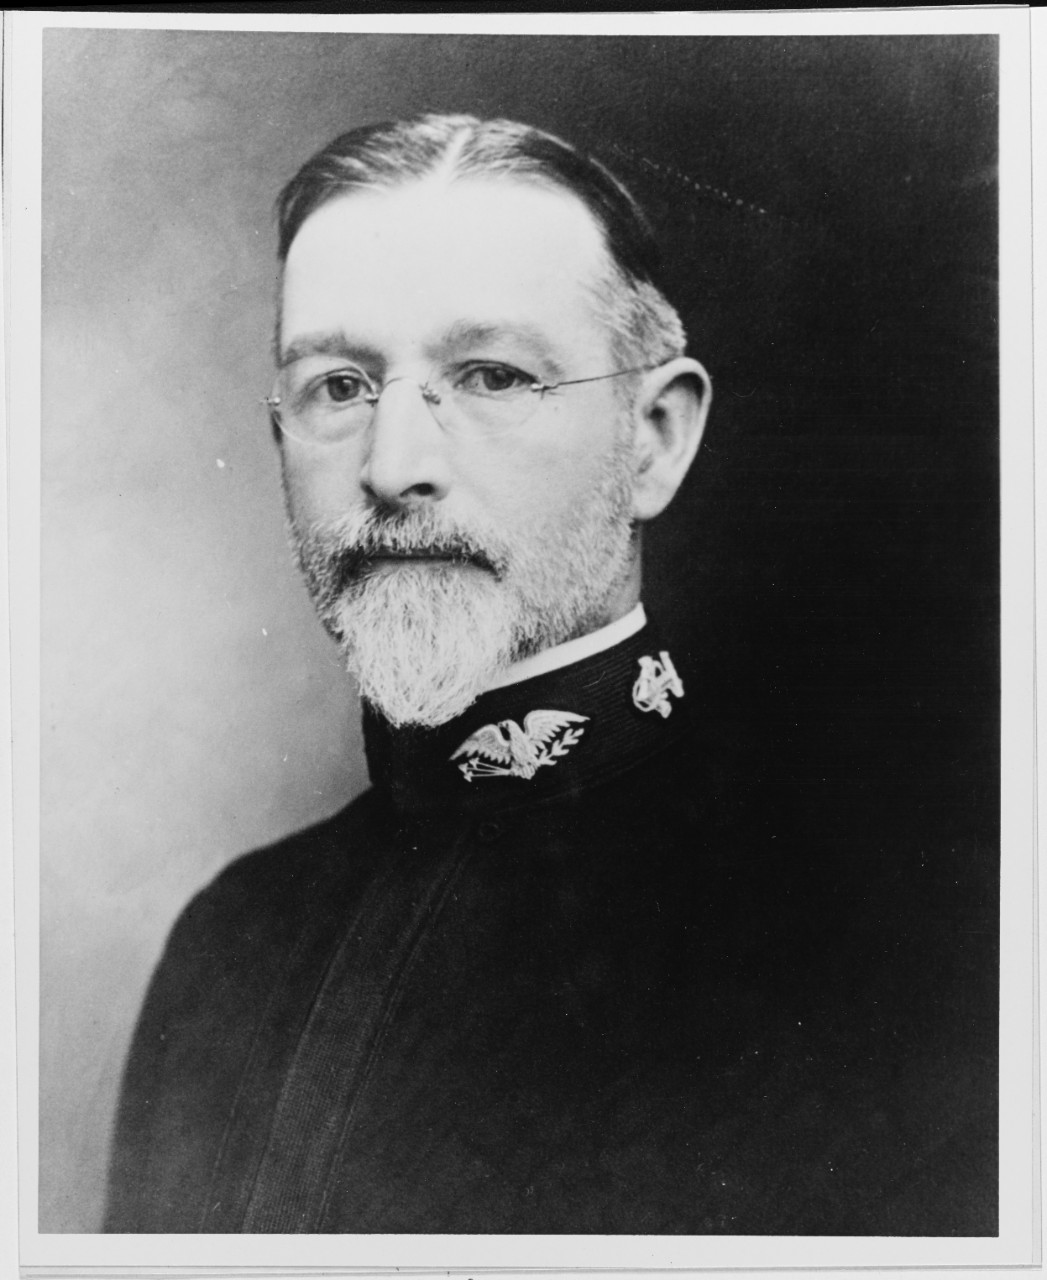 Captain William W. Gilmer, USN